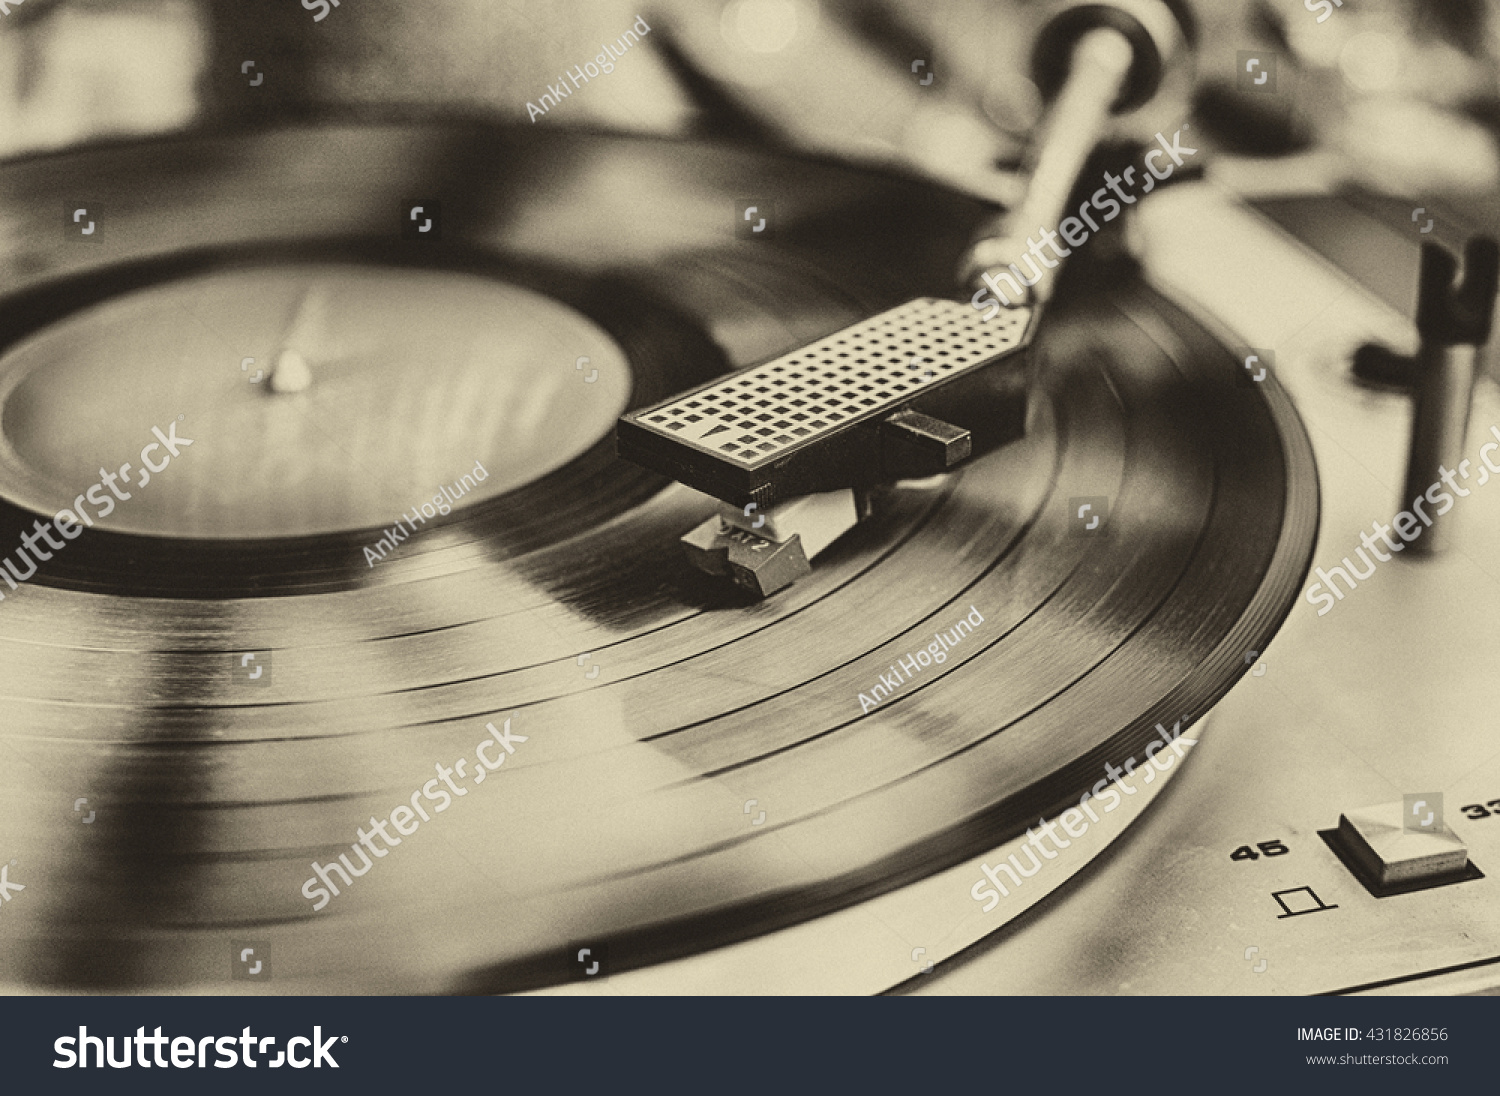 Textured retro image in sepia of vinyl record player. #431826856